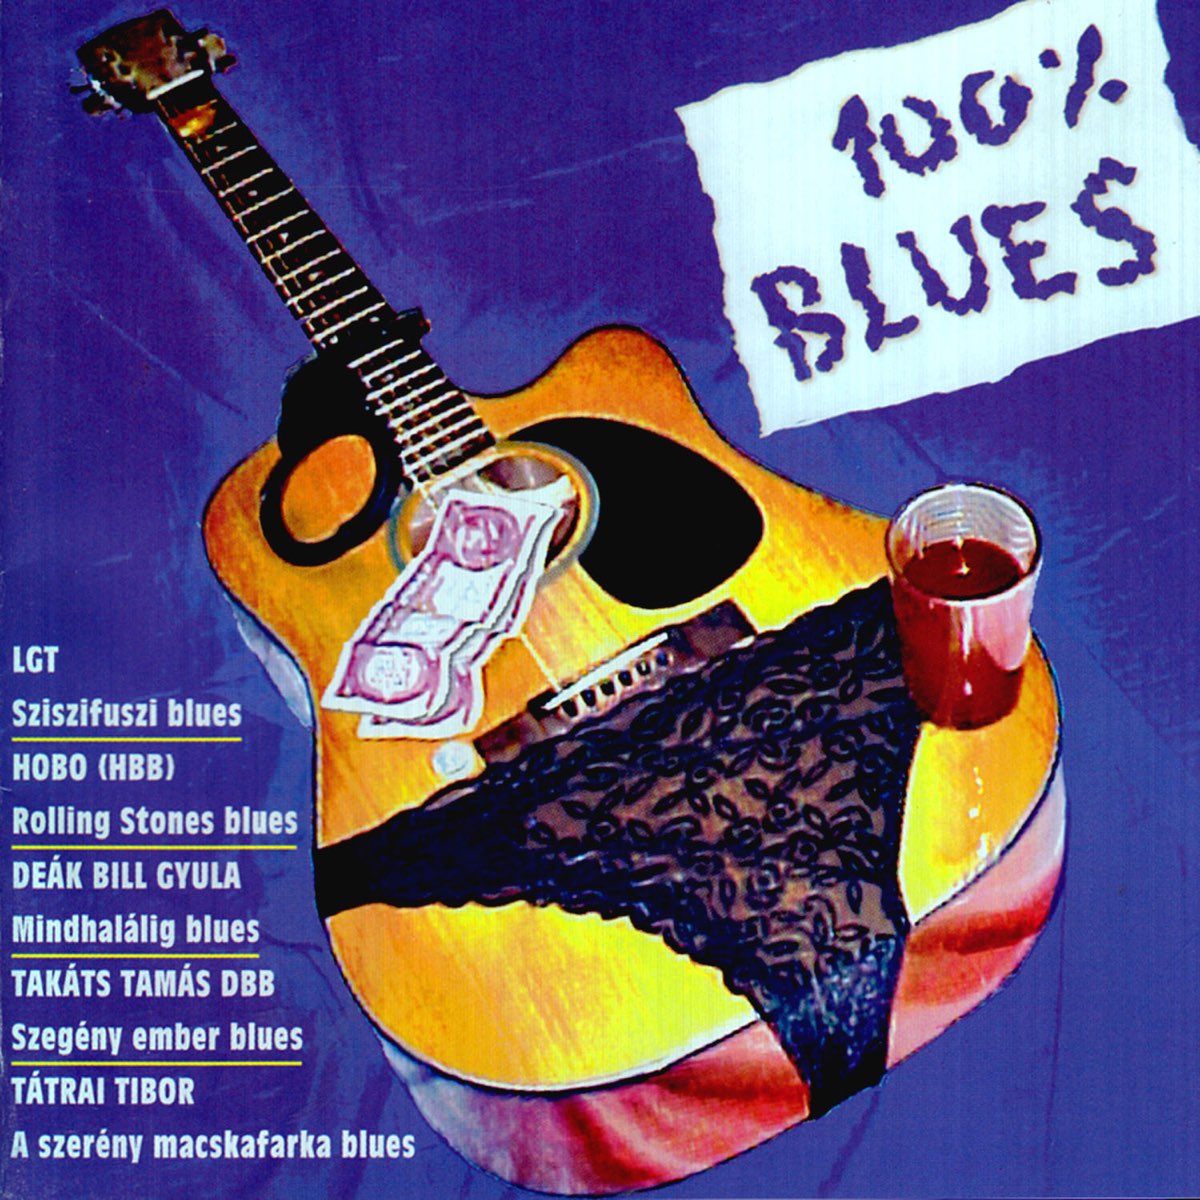 Rolling stones blues. Dirty Blues Band - (1967) Dirty Blues Band. Hobo Blues Tab. Dirty Blues Band, фото. Рок-группа-Hobo Blues Band-картинки.